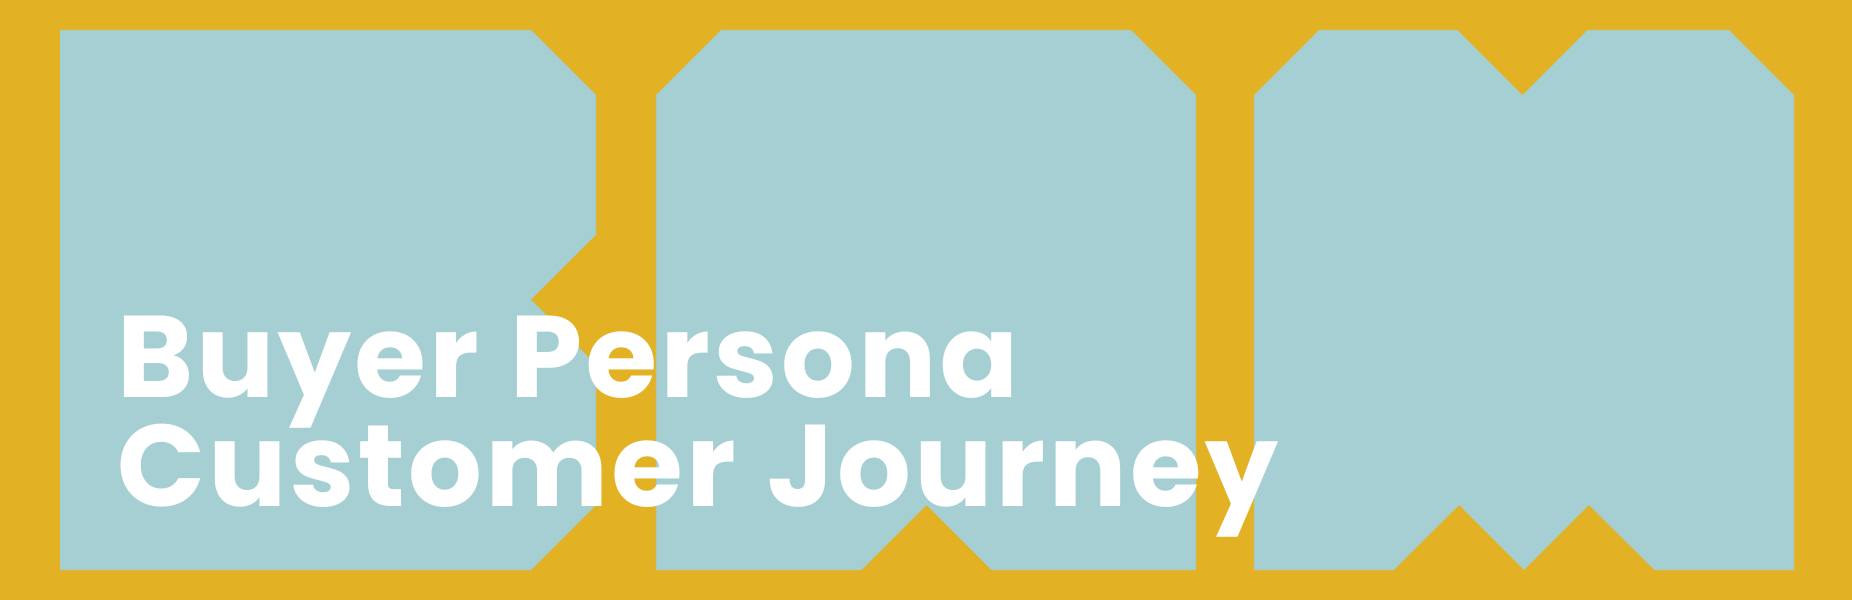 Education - buyer persona customer journey